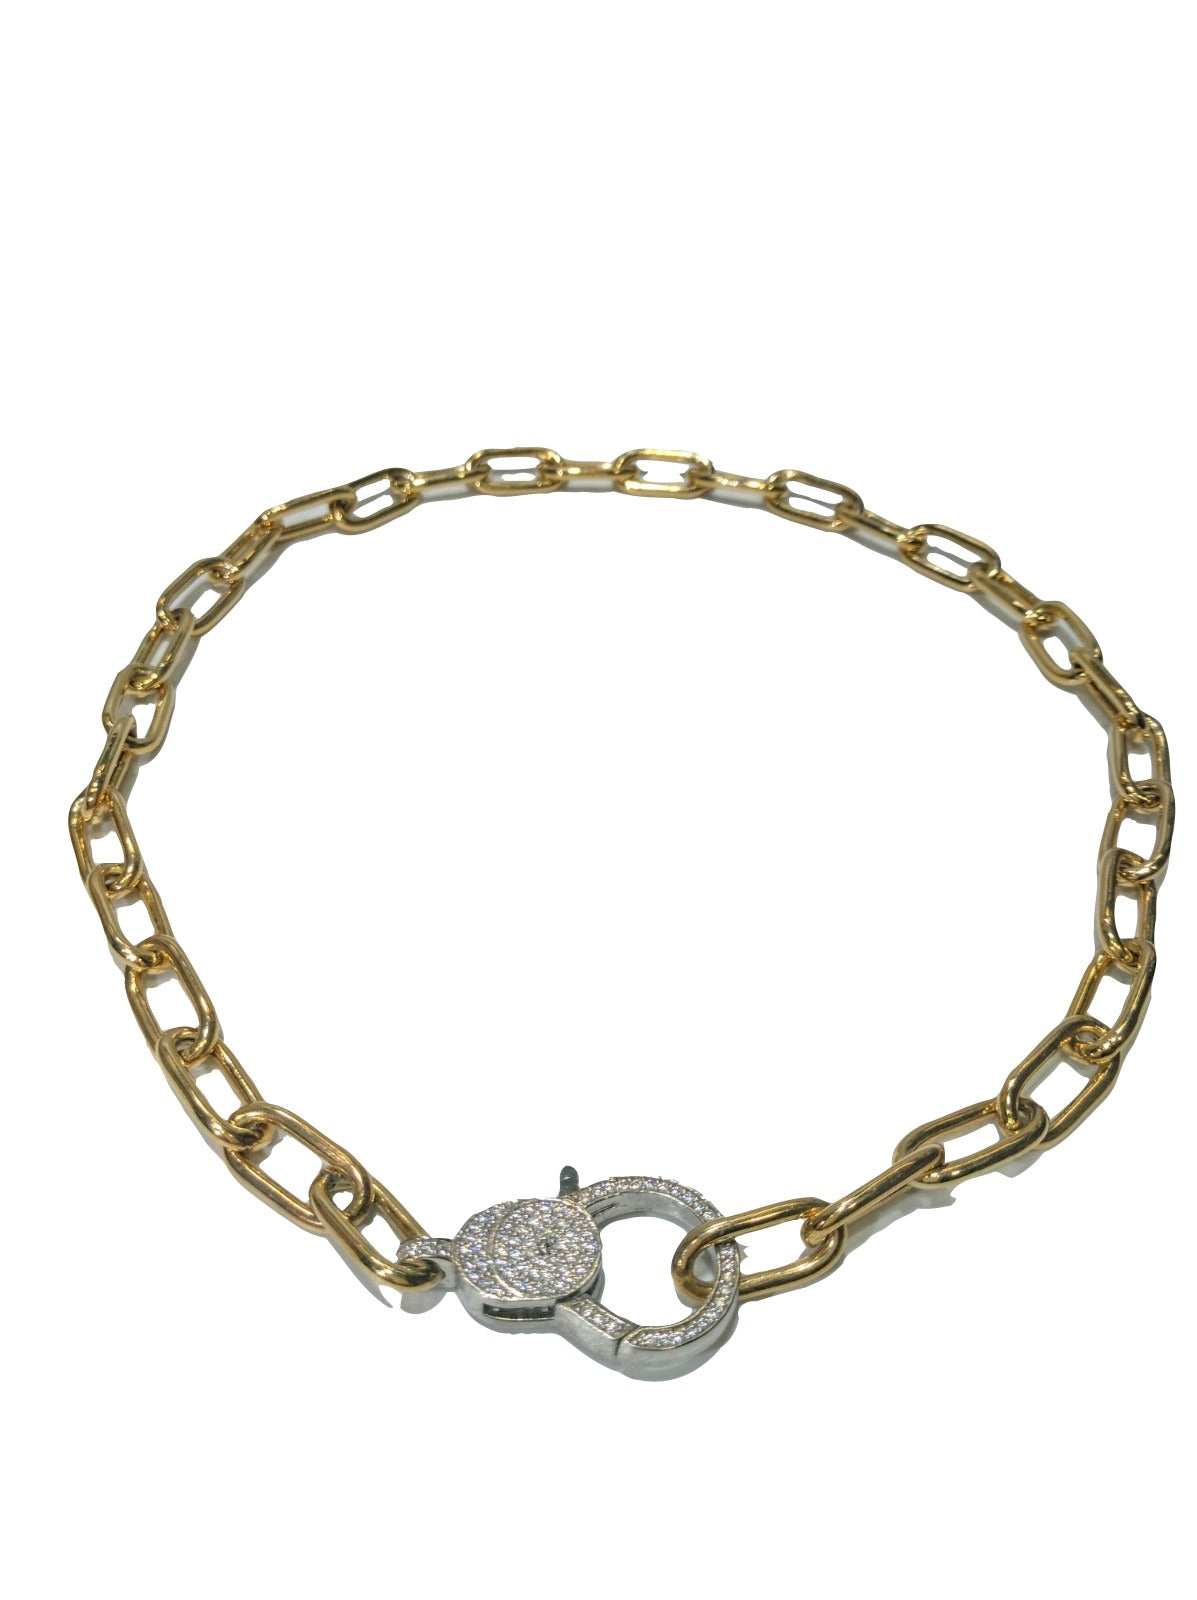 Silver Rolò Chain Necklace with Zirconium stones